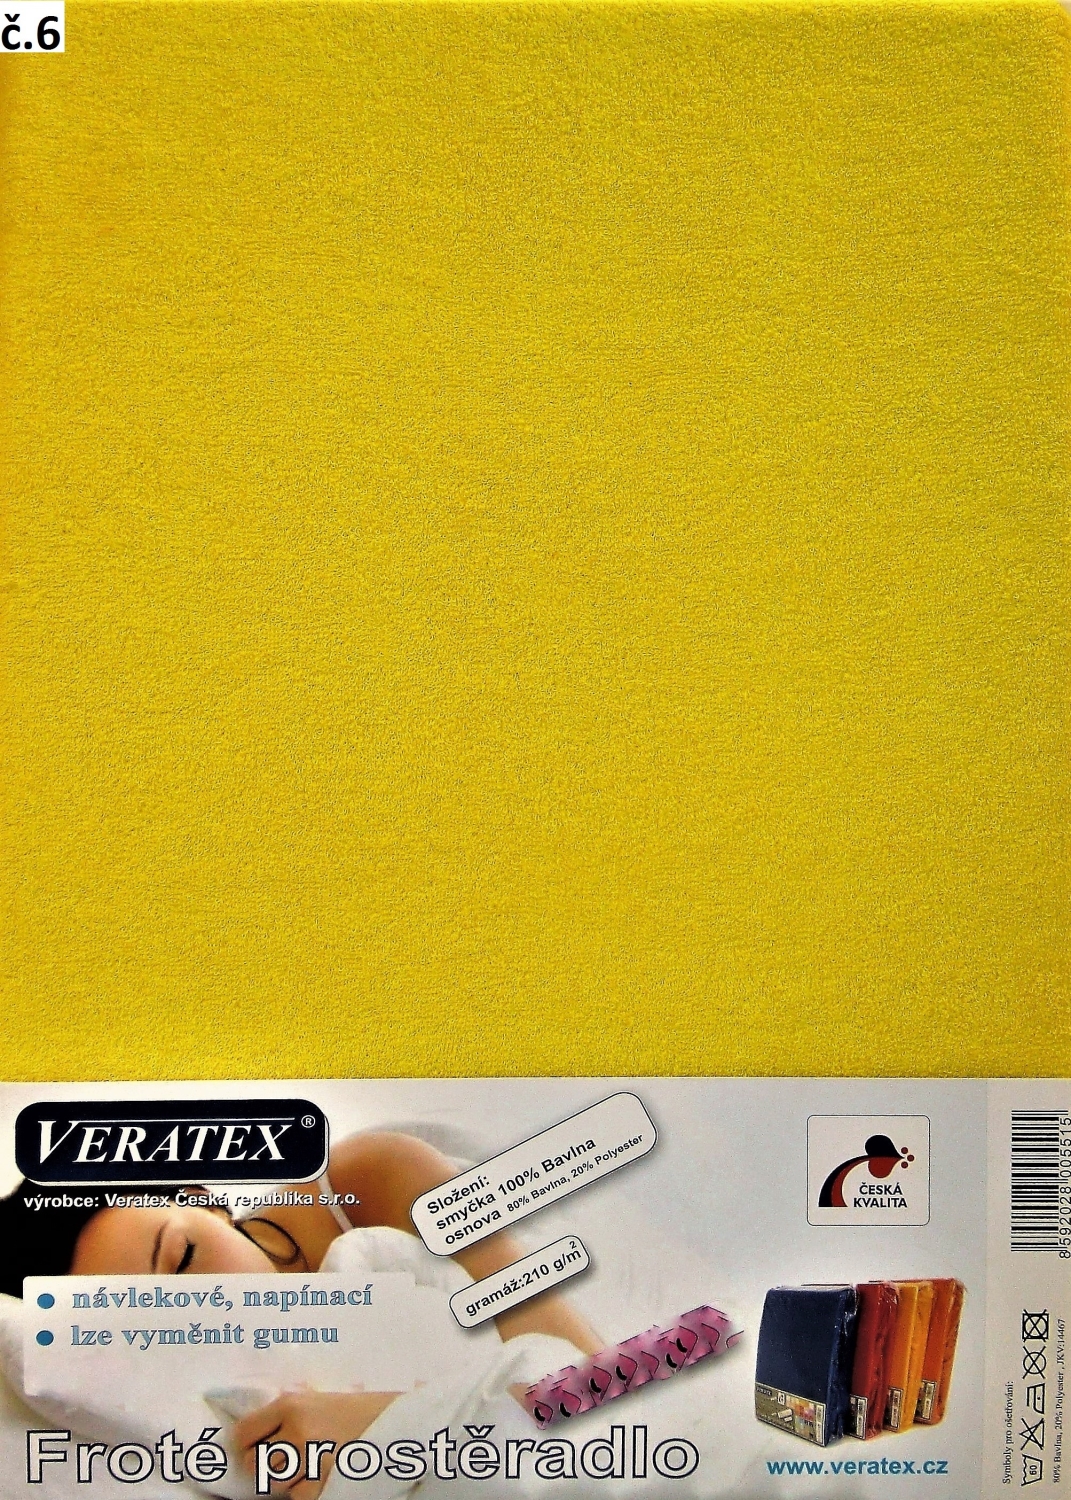 Veratex Froté prostěradlo 90x210/16 cm (č. 6-stř.žlutá) 90 x 210 cm